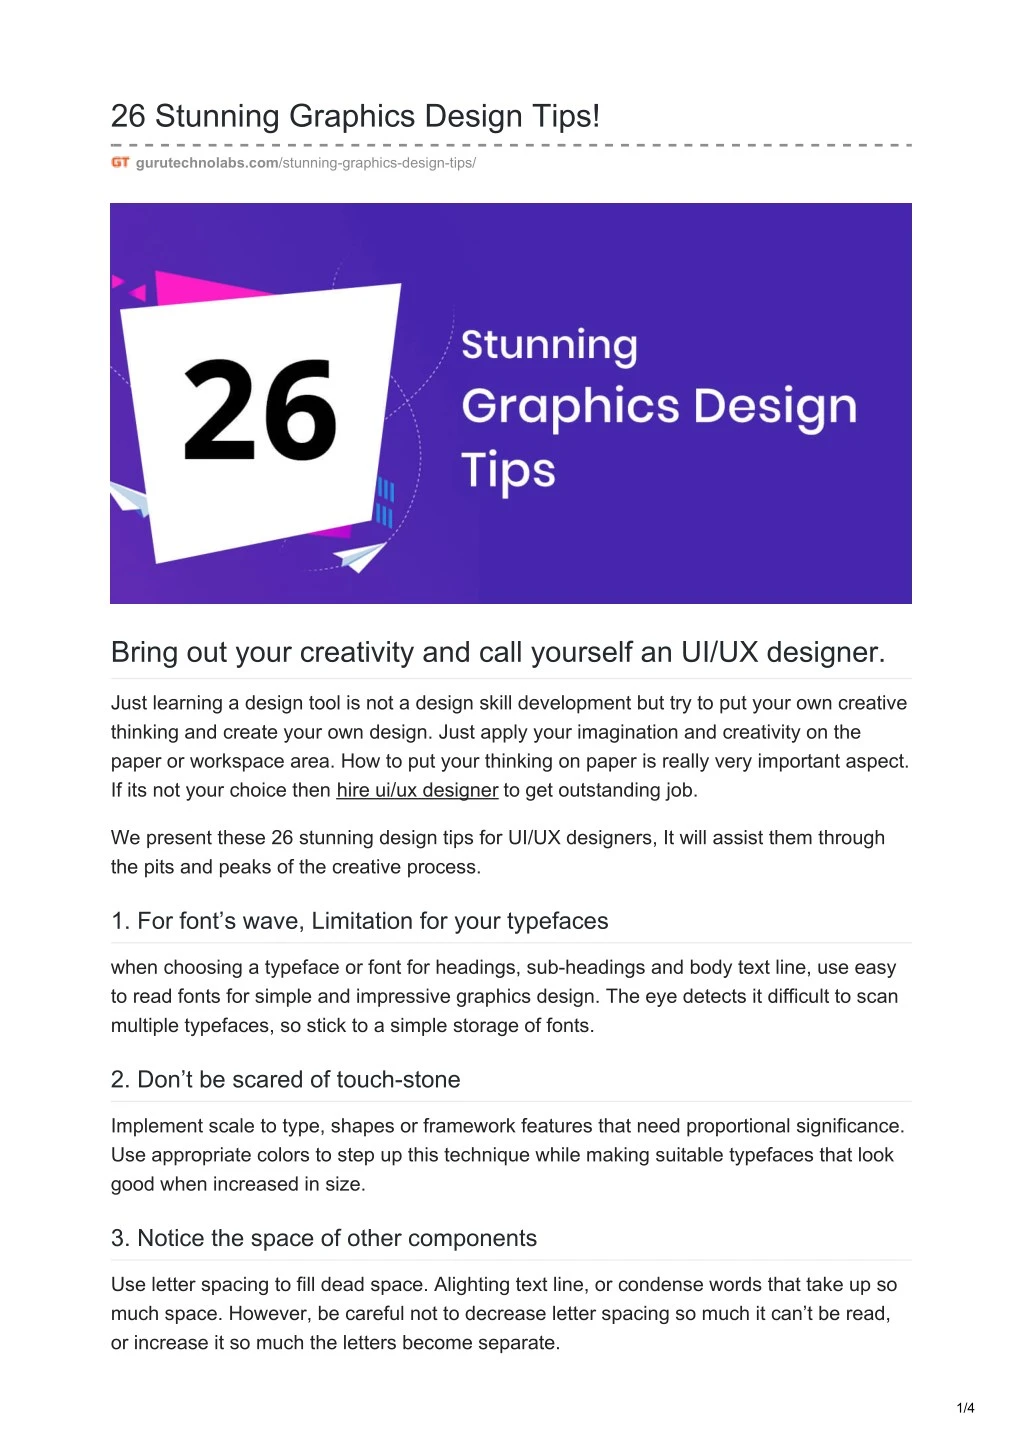 26 stunning graphics design tips